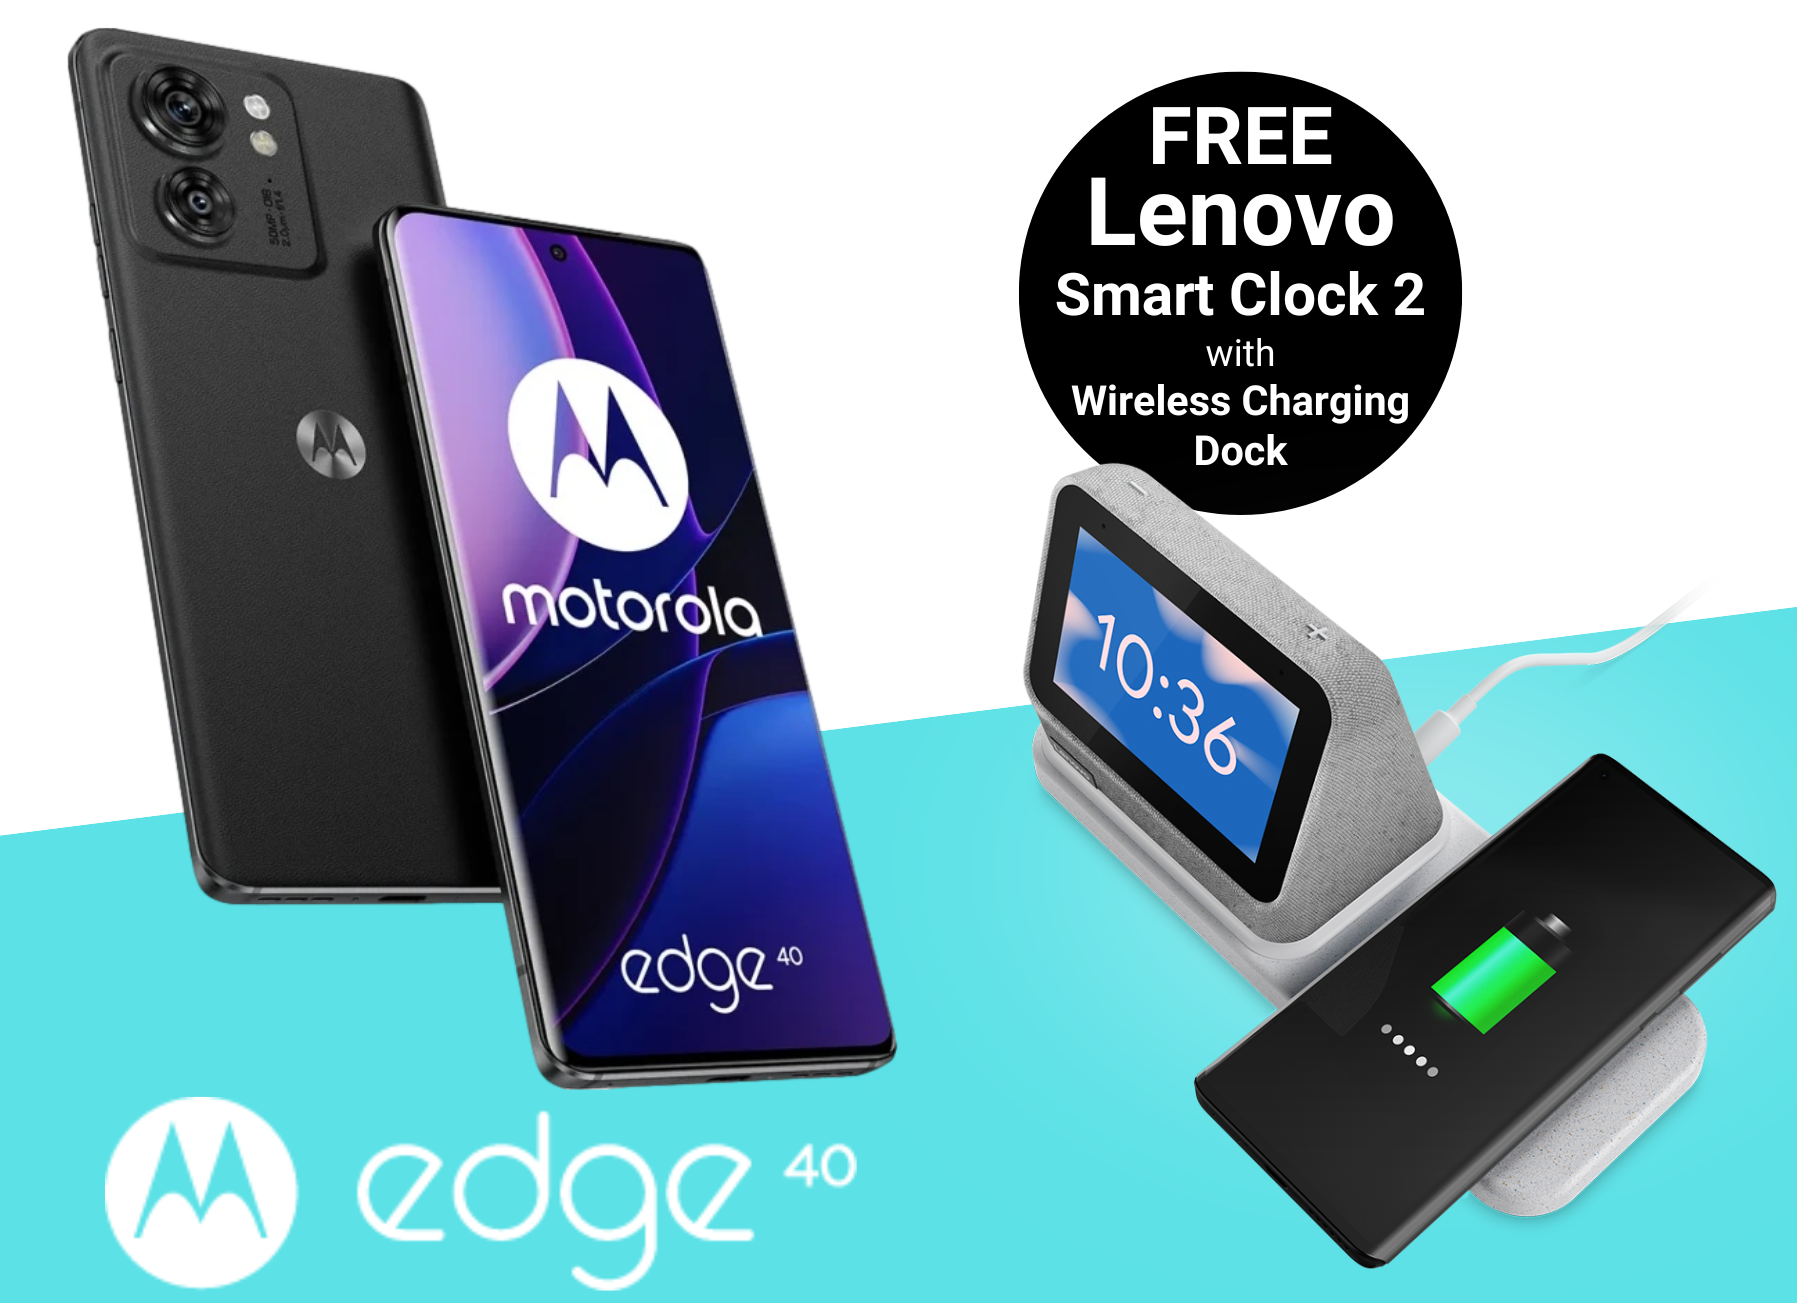 Motorola Edge 40 Deals with Free Lenovo Smart Clock 2 and Wireless Charging Dock